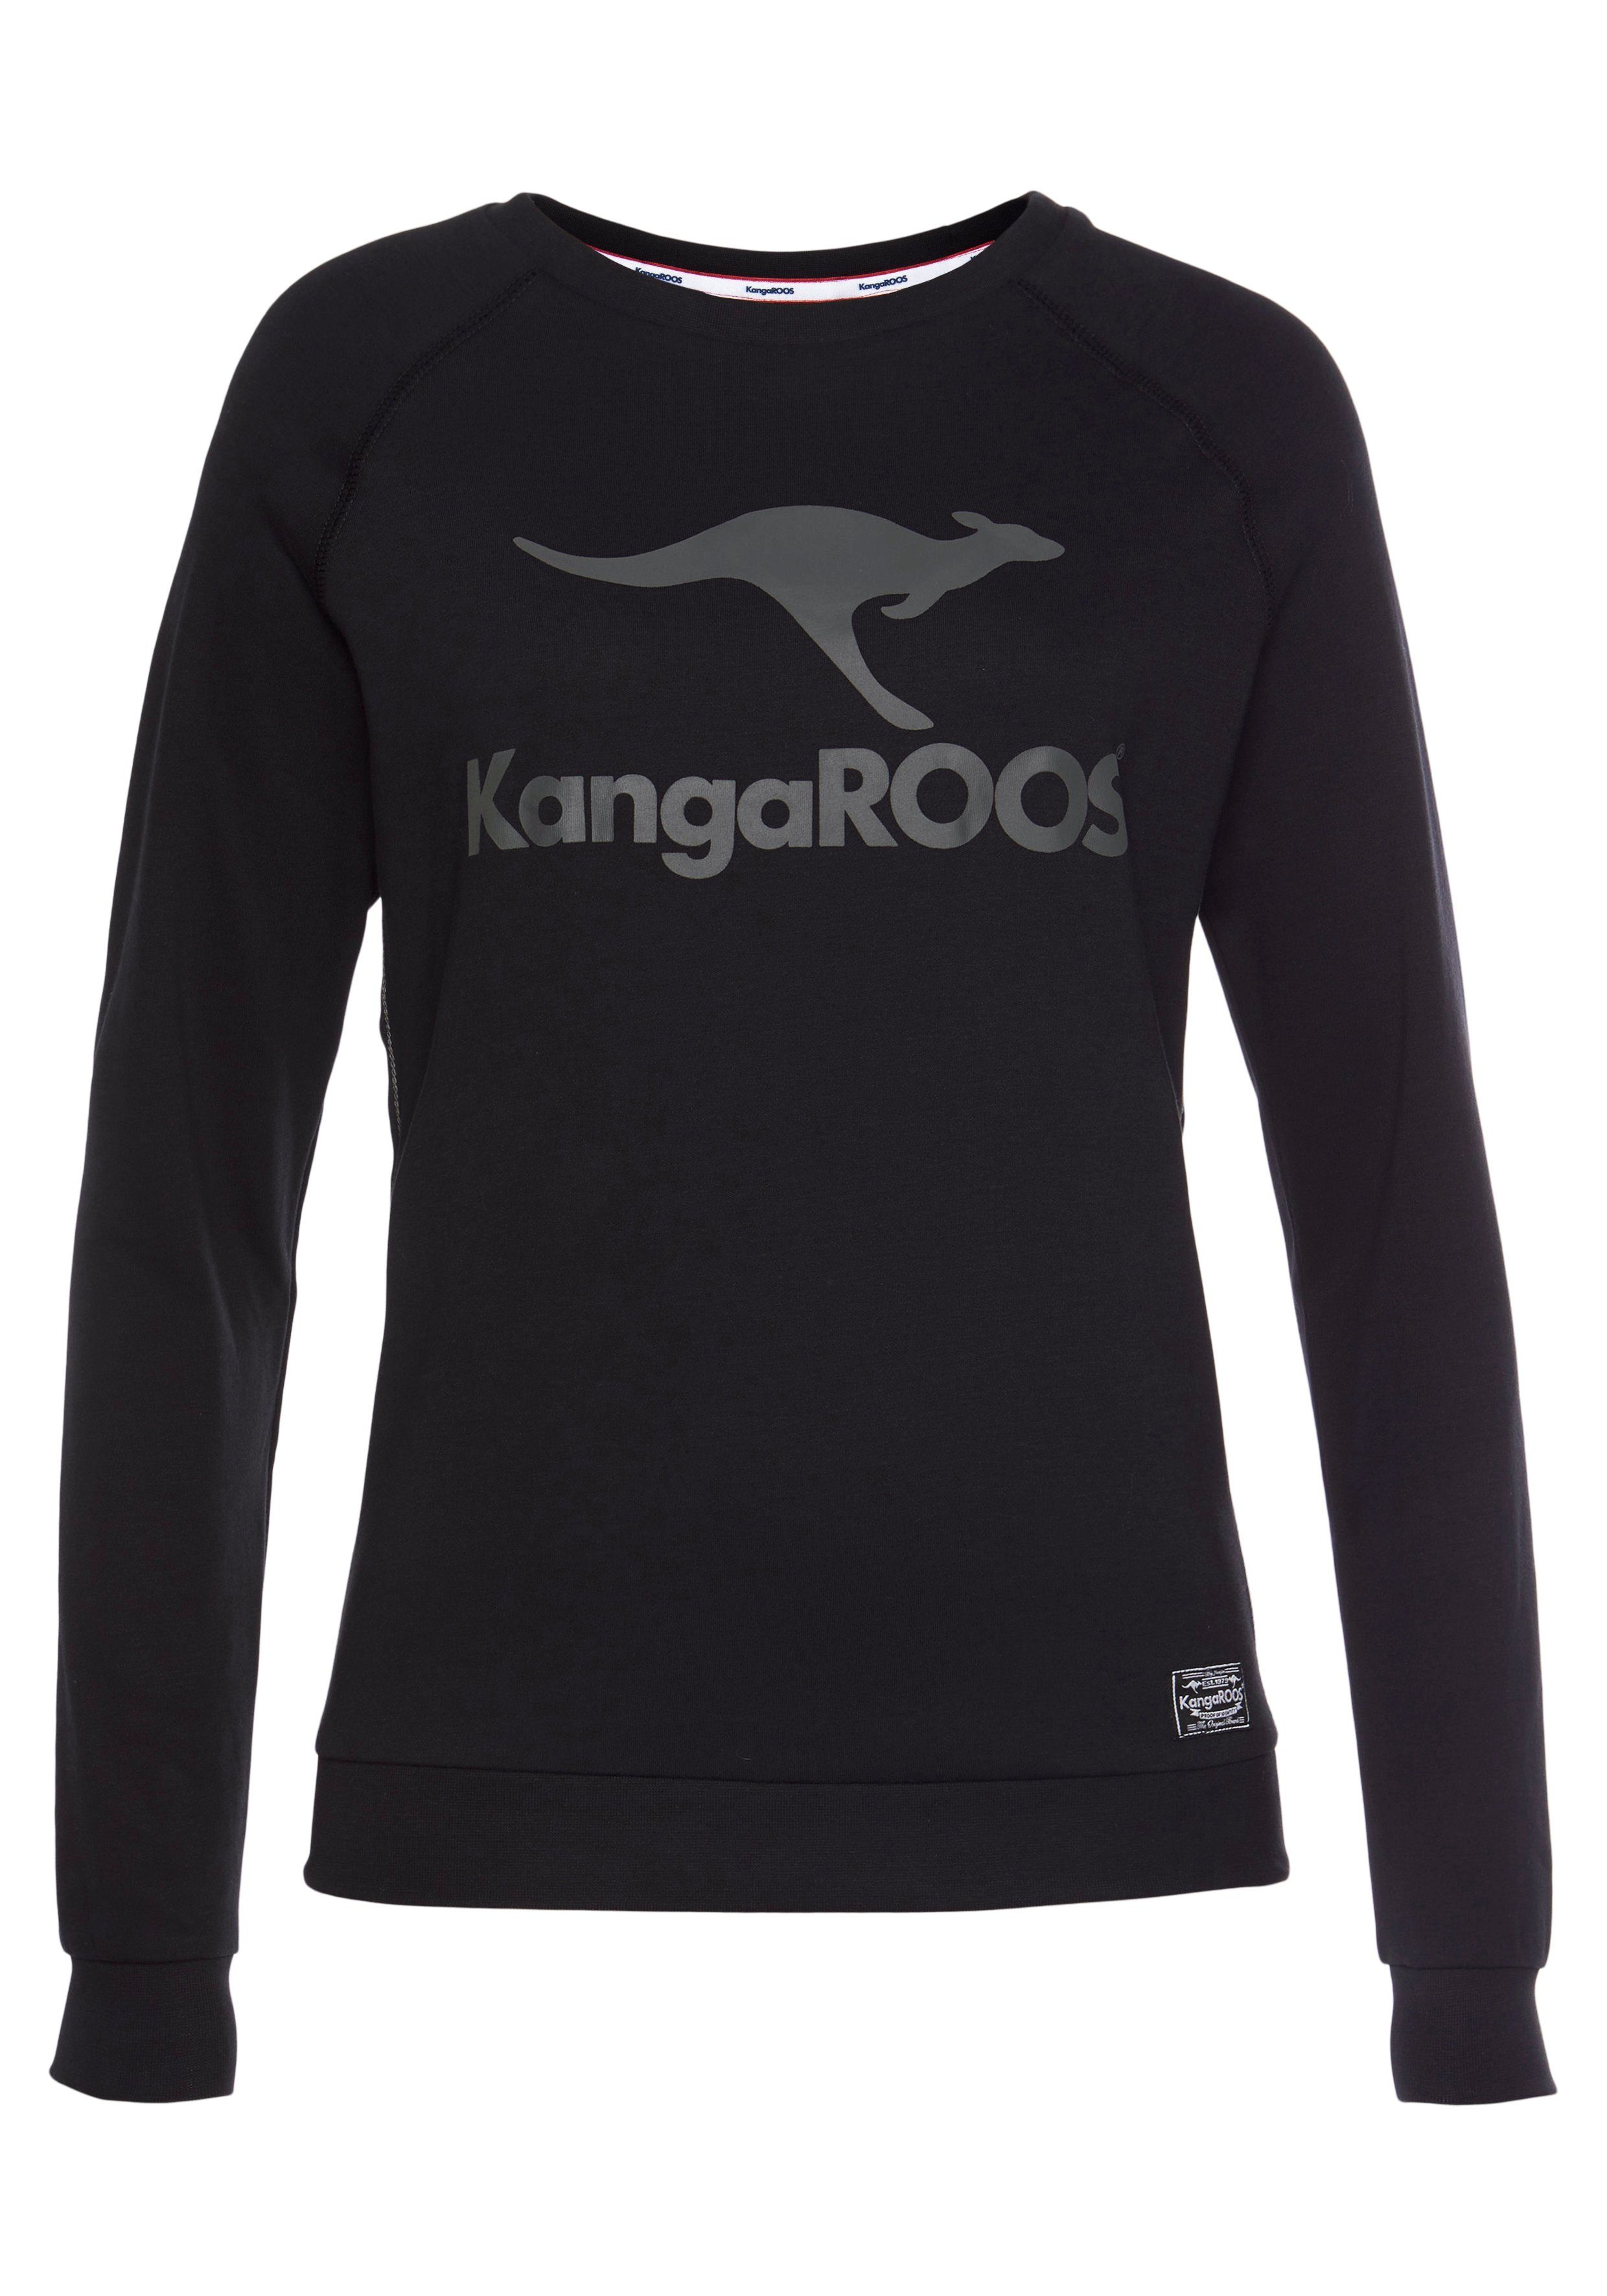 großem schwarz KangaROOS Sweater mit Label-Print vorne